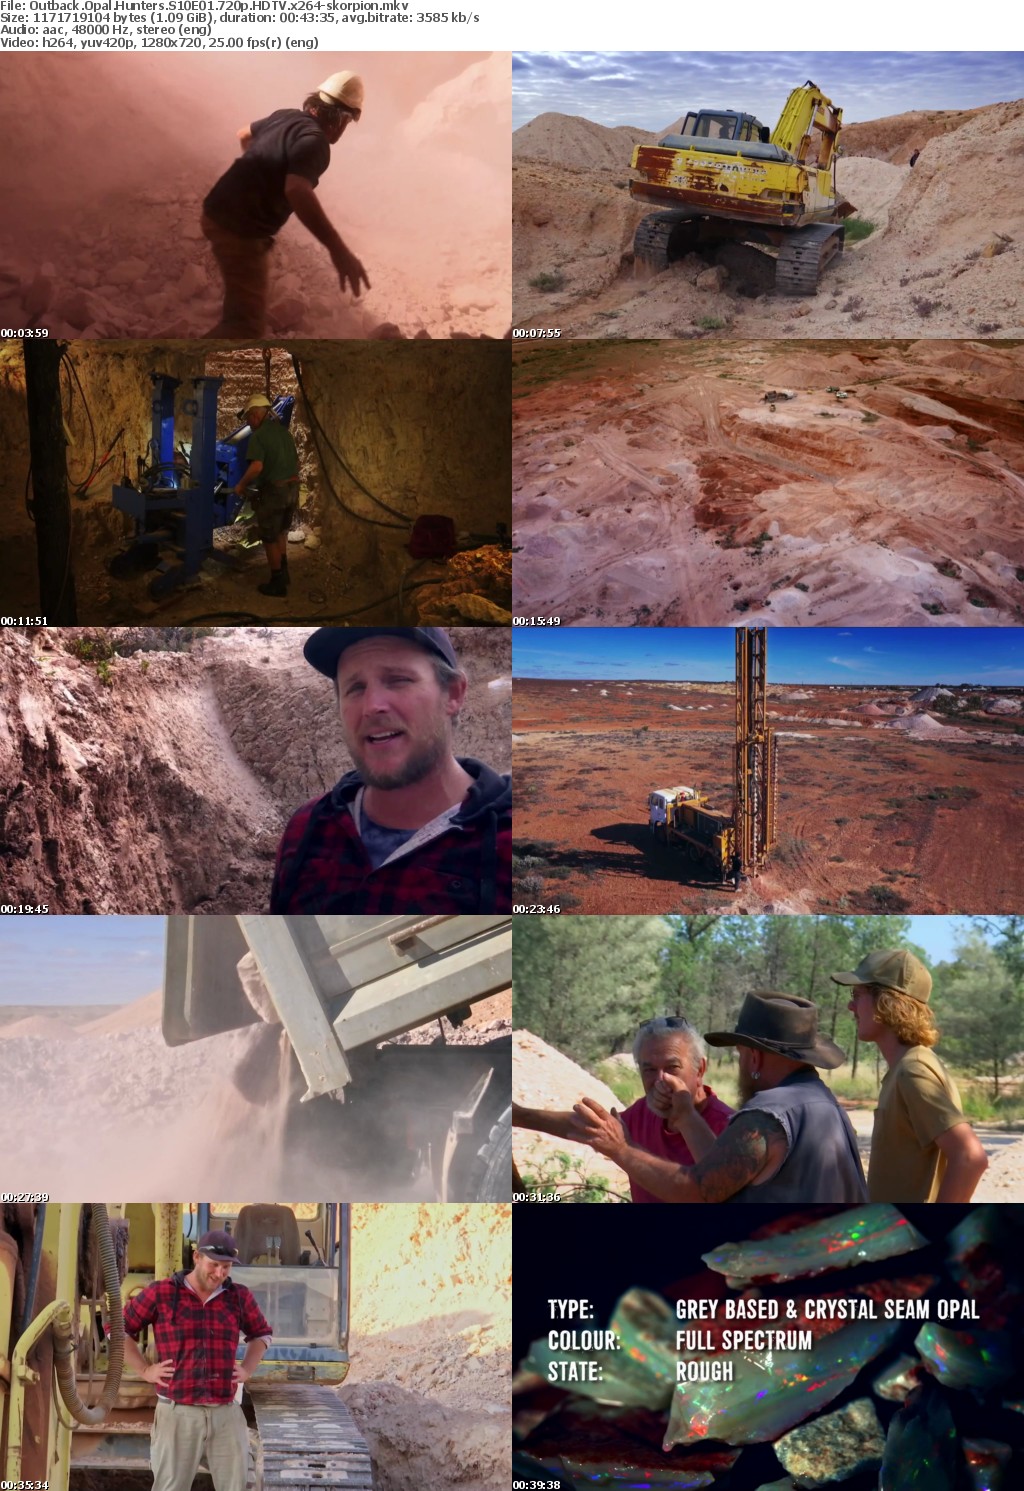 Outback Opal Hunters S10E01 720p HDTV x264-skorpion mkv